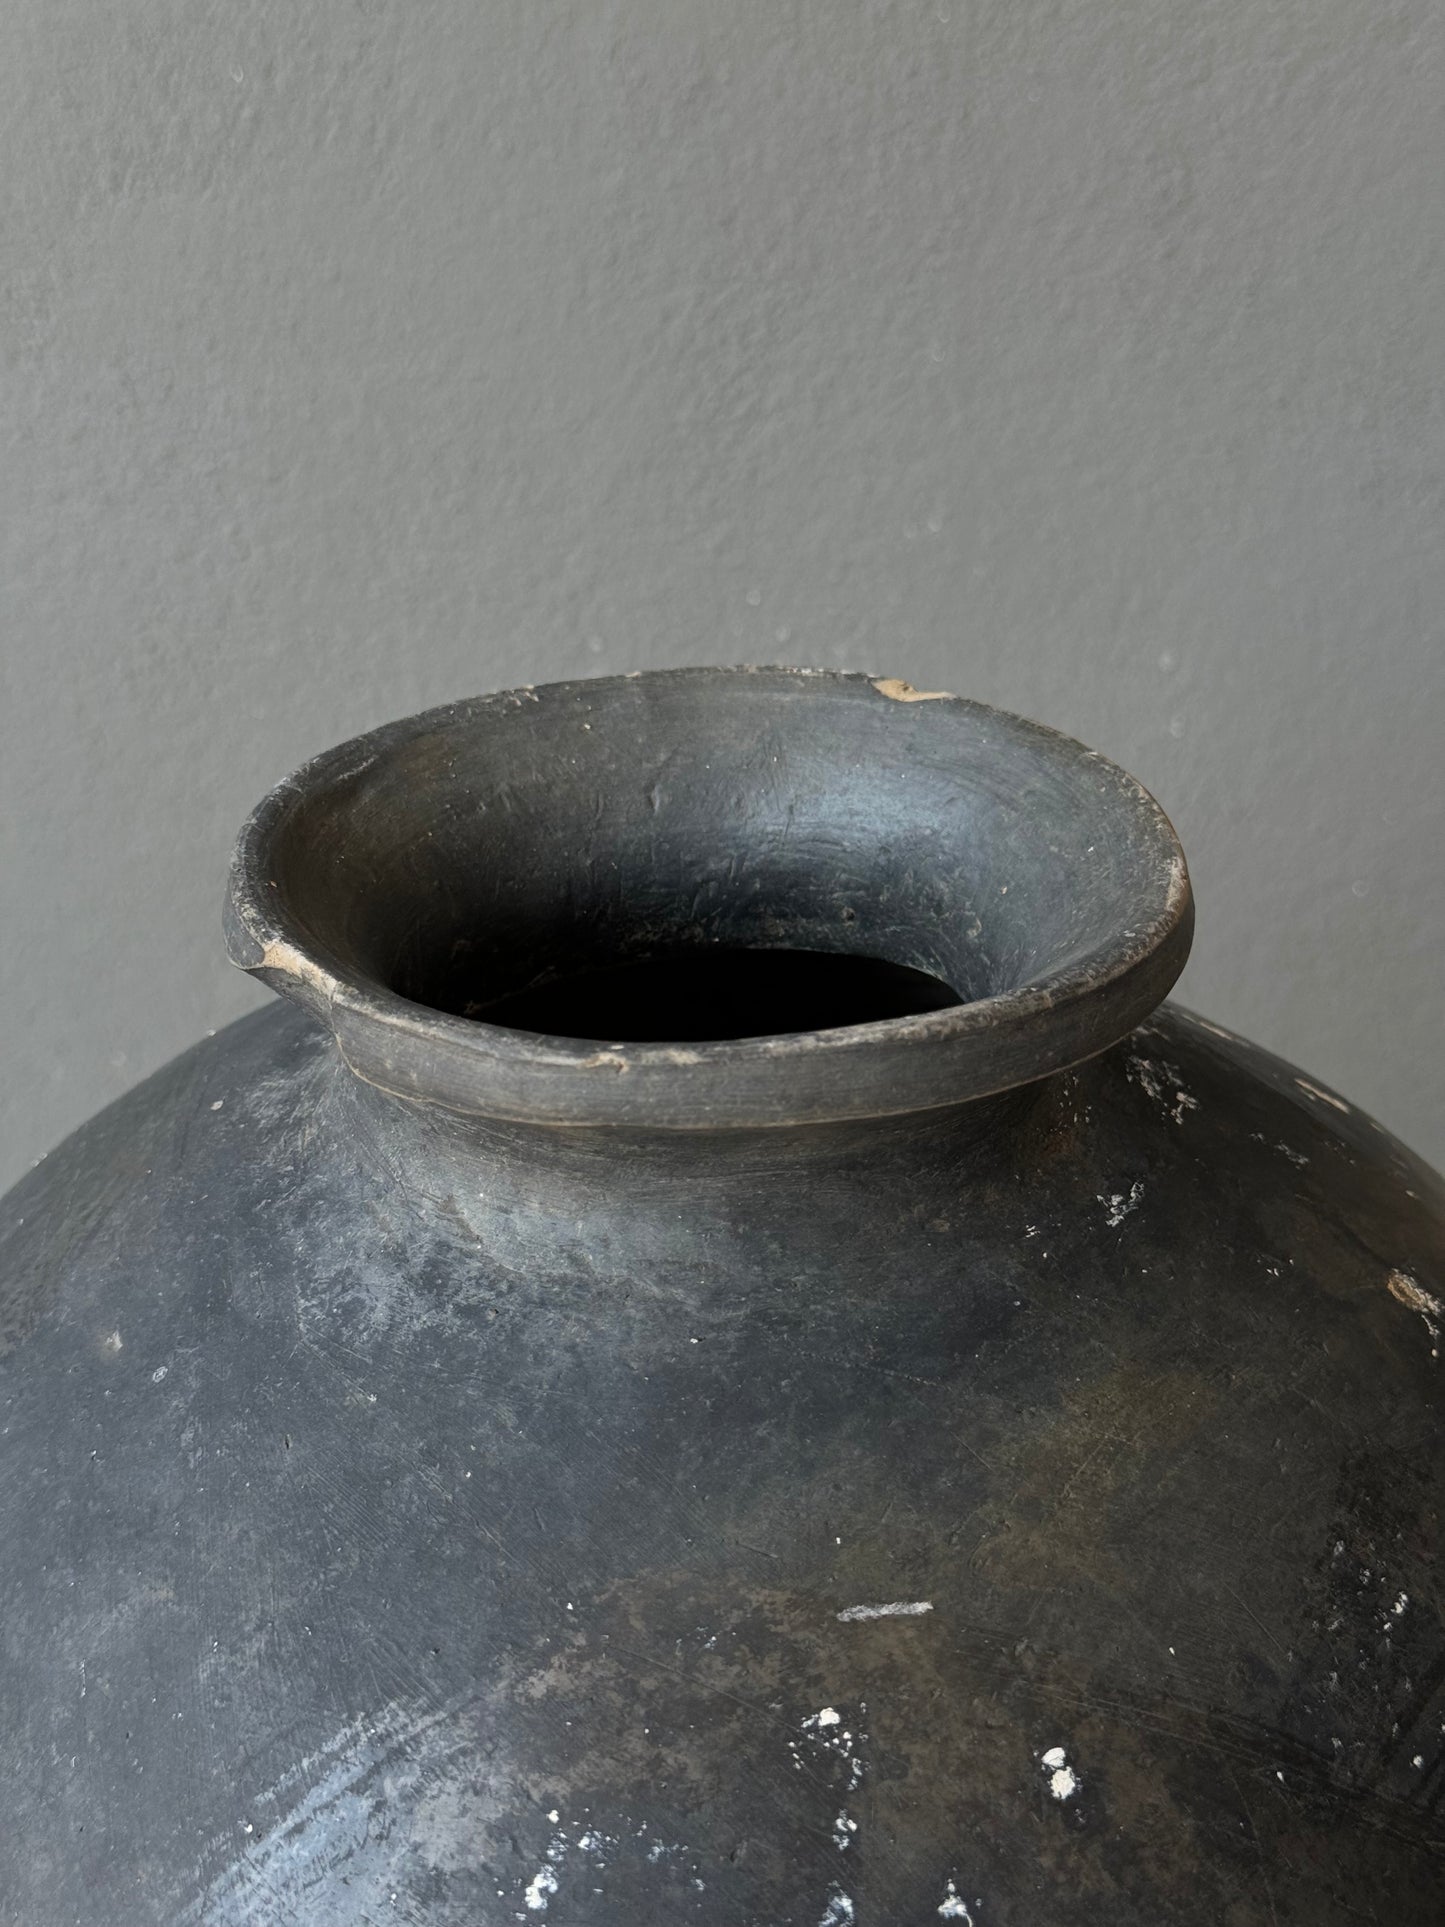 Black Clay Ceramic Water Pot From Coyotepec, Oaxaca / Olla Antigua De Barro Negro De Coyotepec, Oaxaca